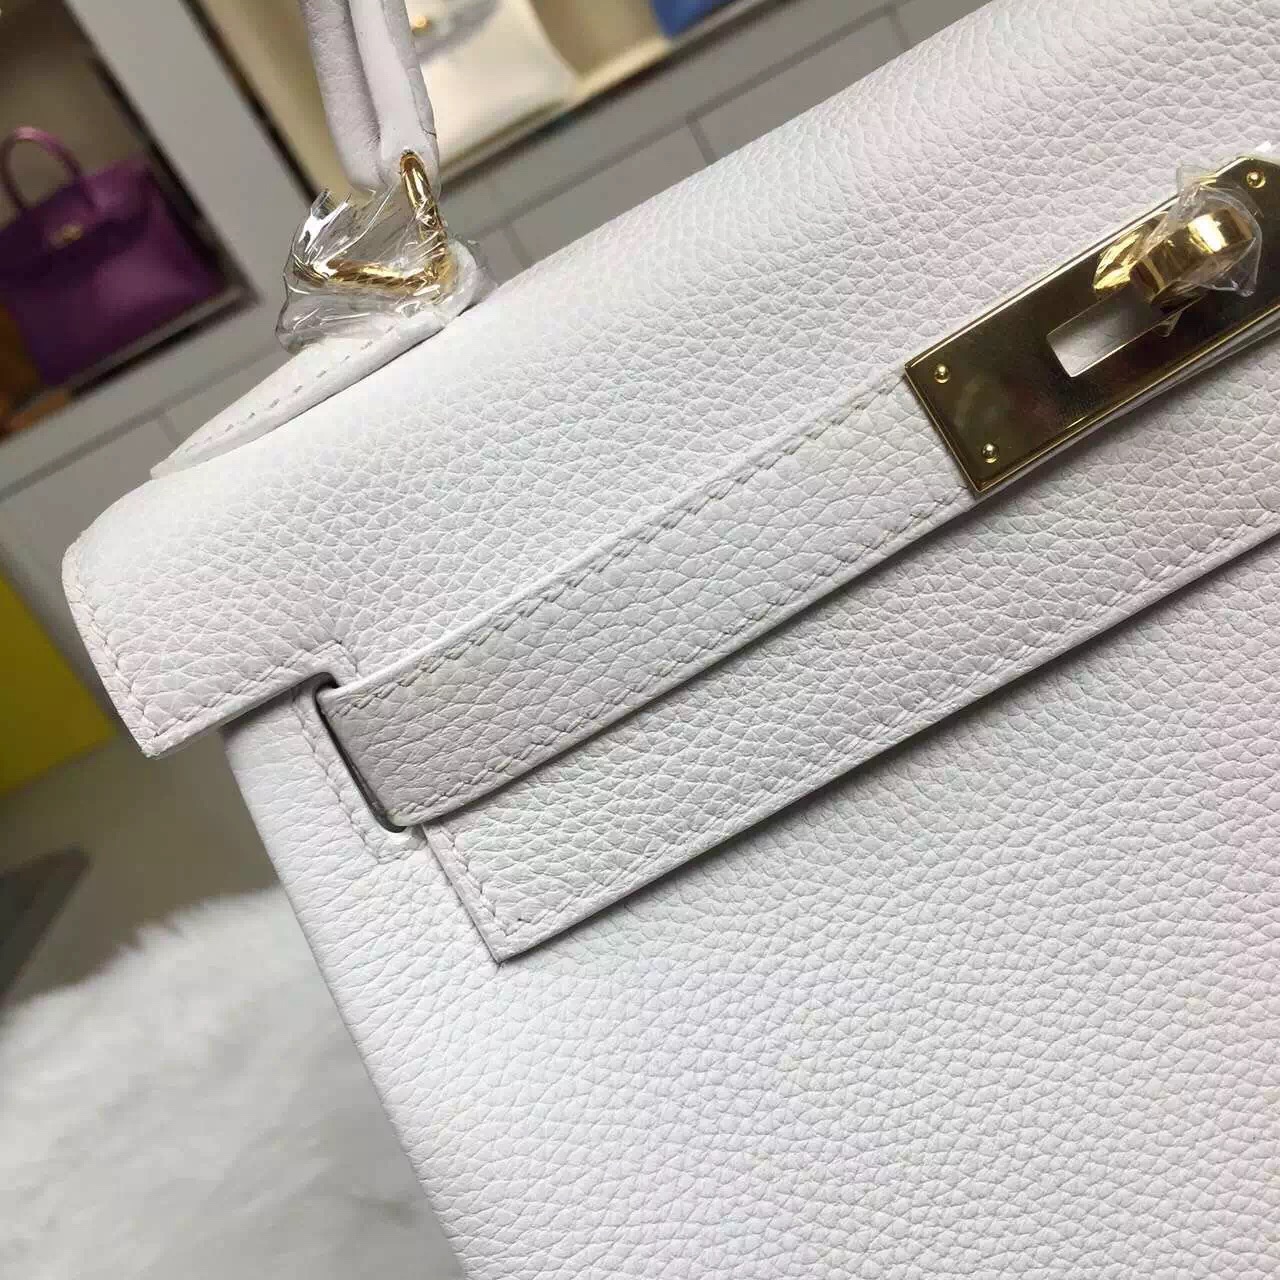 Luxury Women&#8217;s Handbag Hermes Pure White Original Togo Leather Kelly Bag28CM